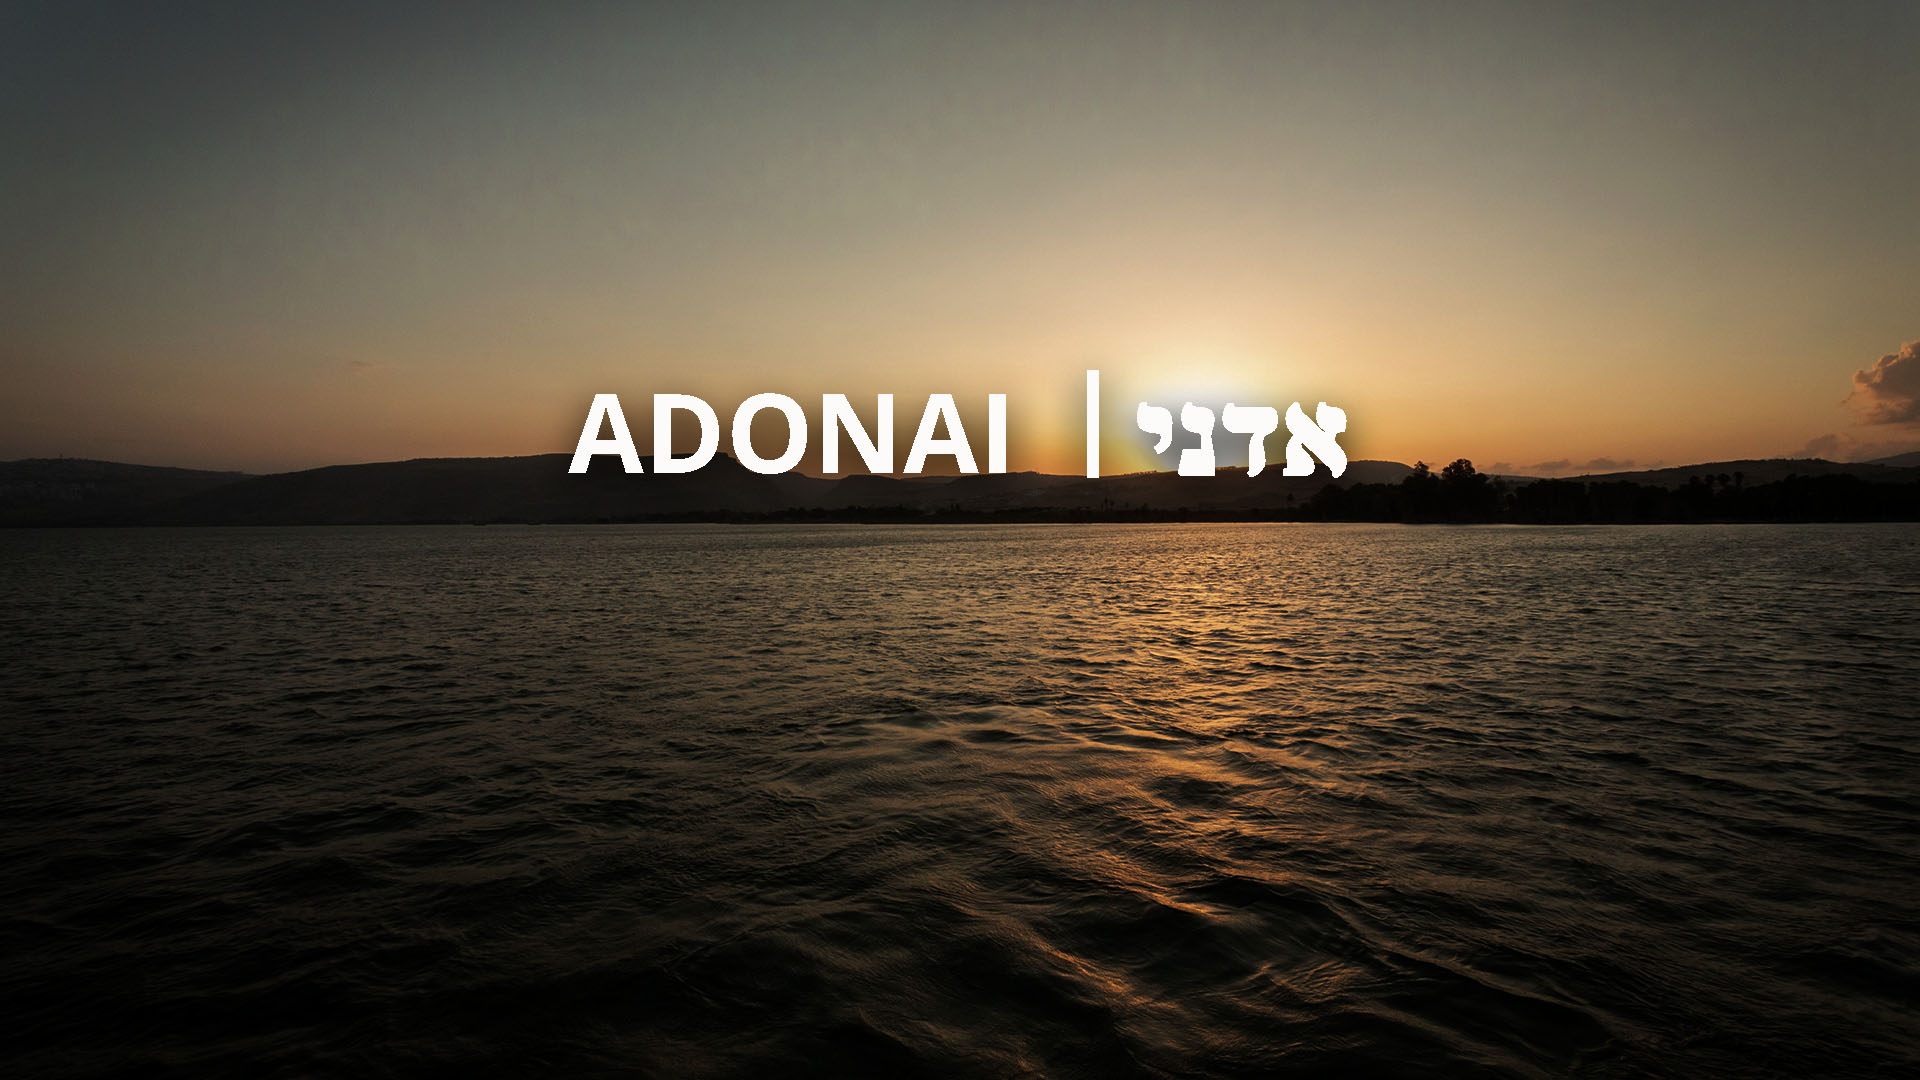 Adonai: The Name of God